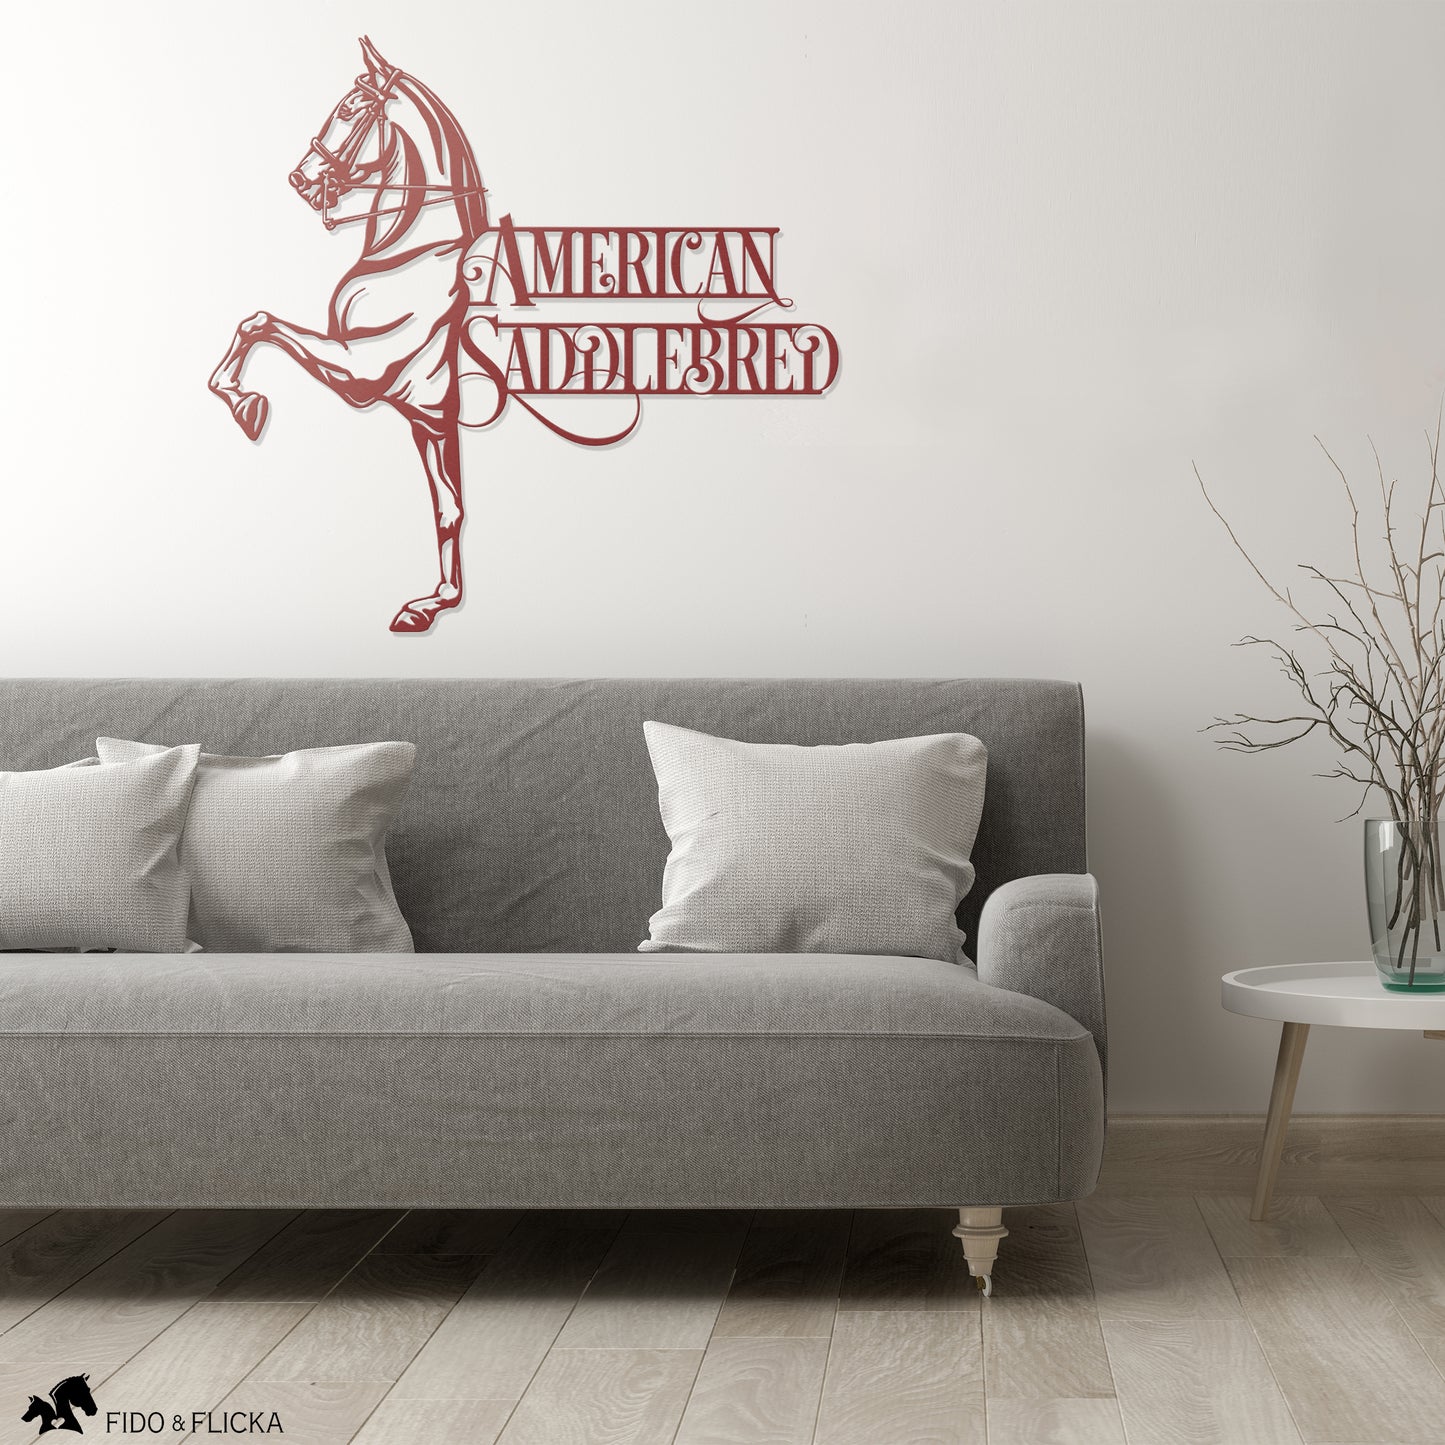 red metal american saddlebred sign in living room